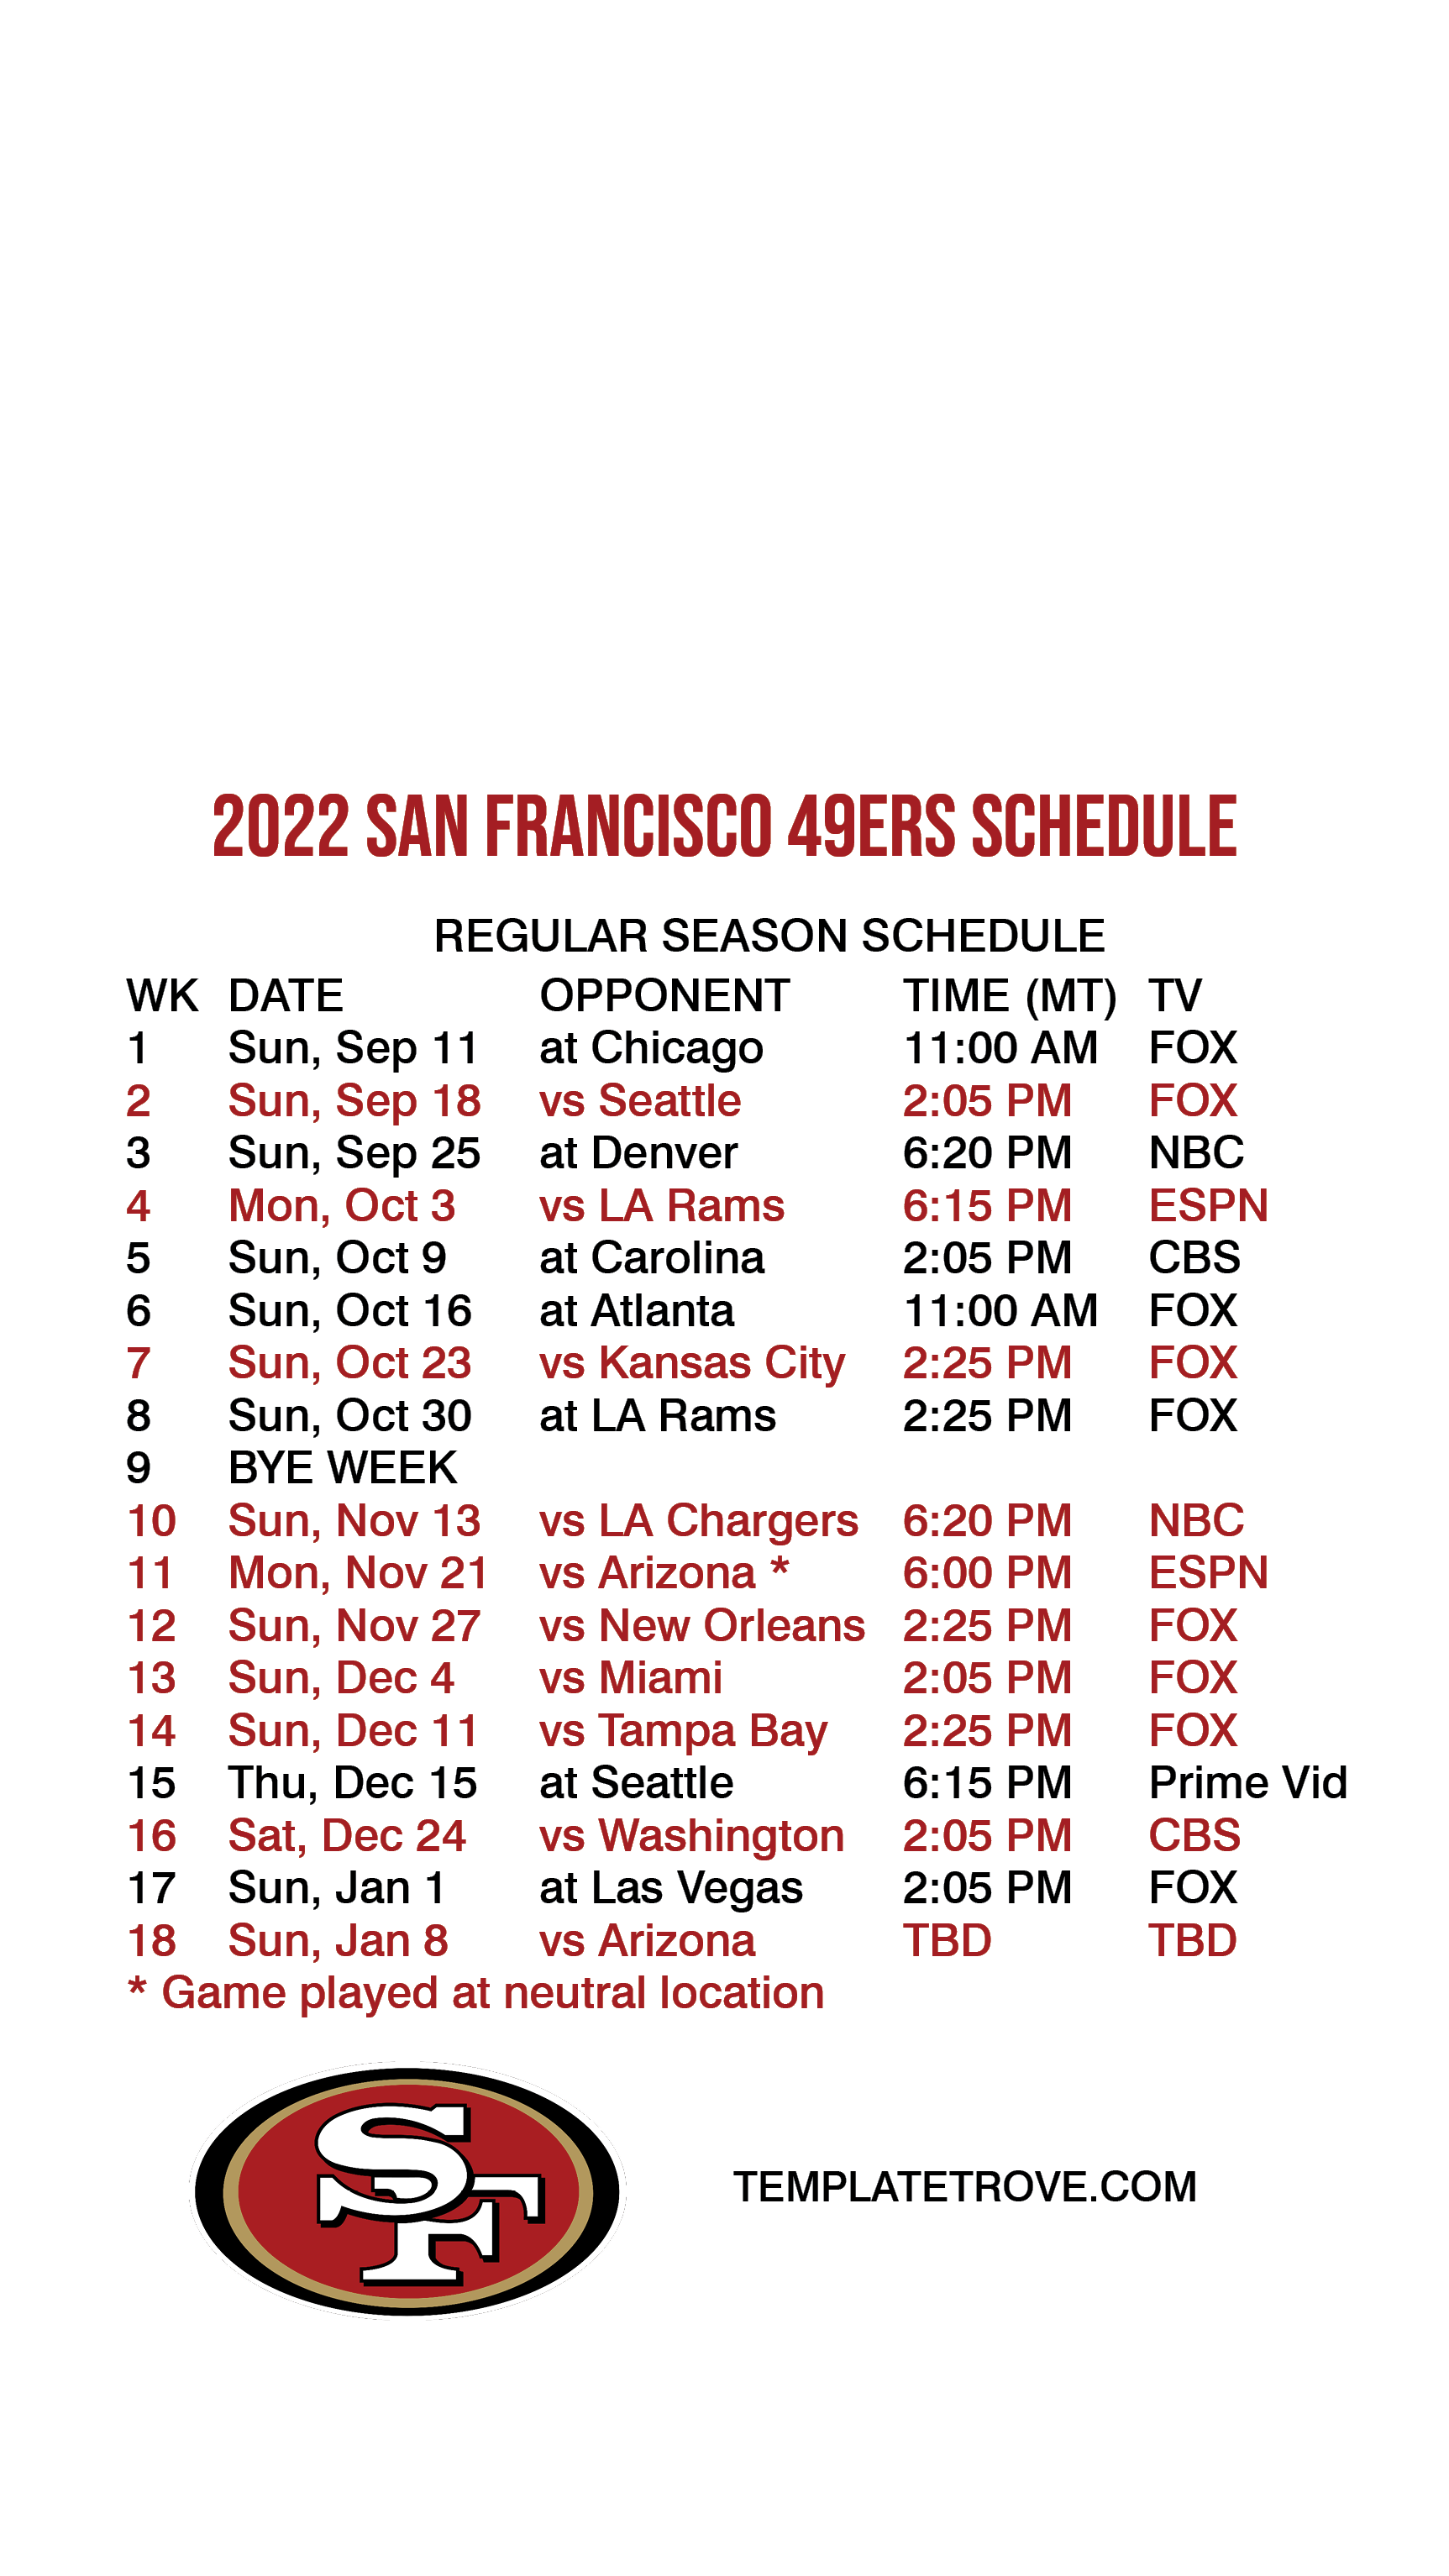 2022-2023 San Francisco 49ers Lock Screen Schedule for iPhone 6-7-8 Plus